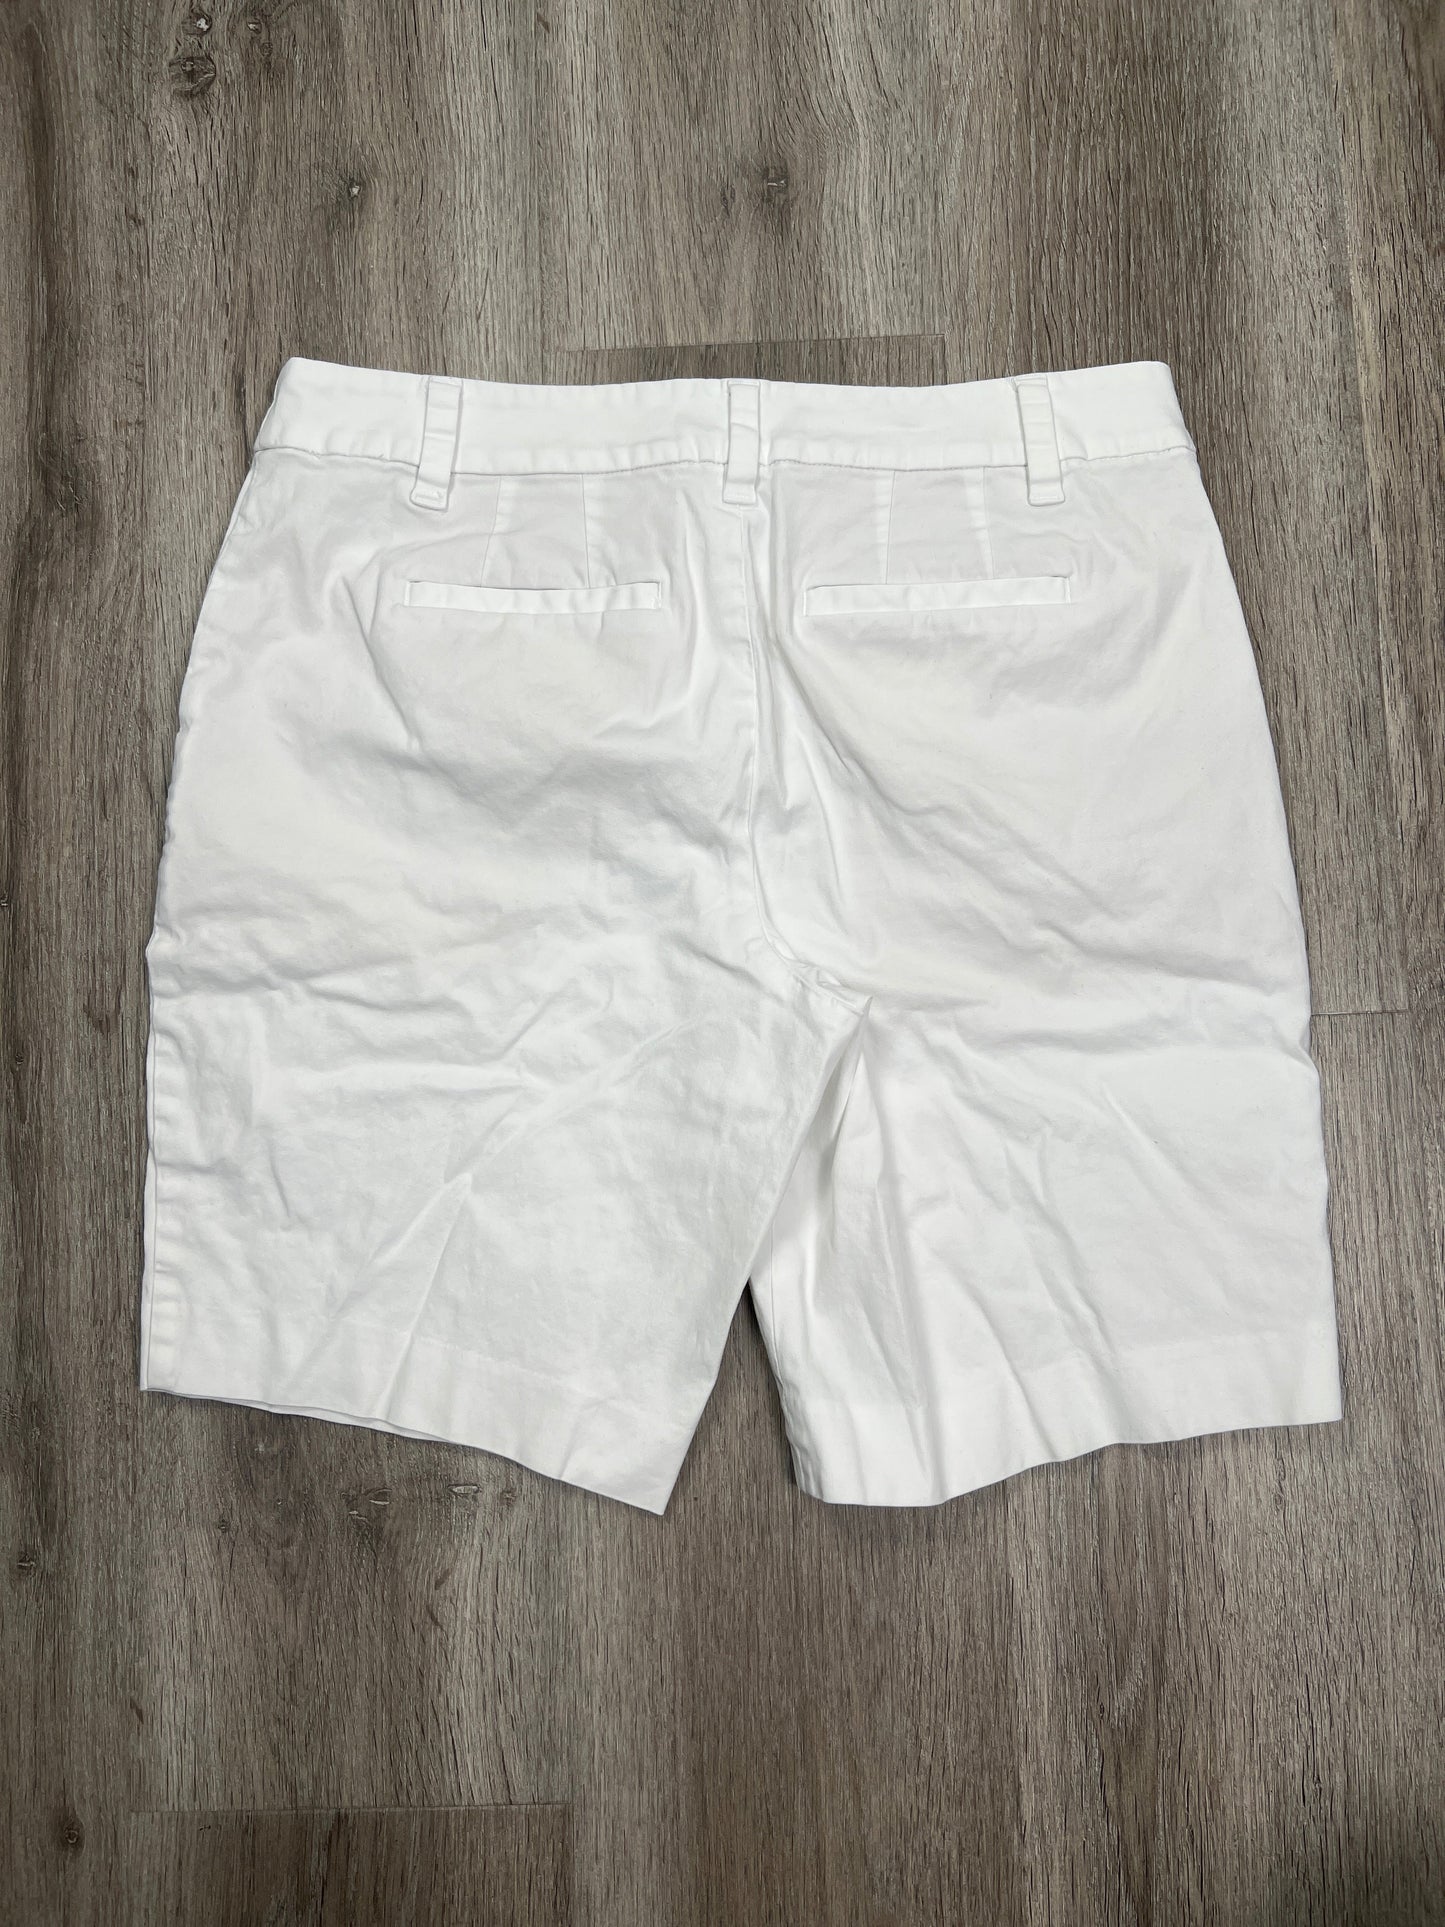 White Shorts Talbots, Size Petite  M